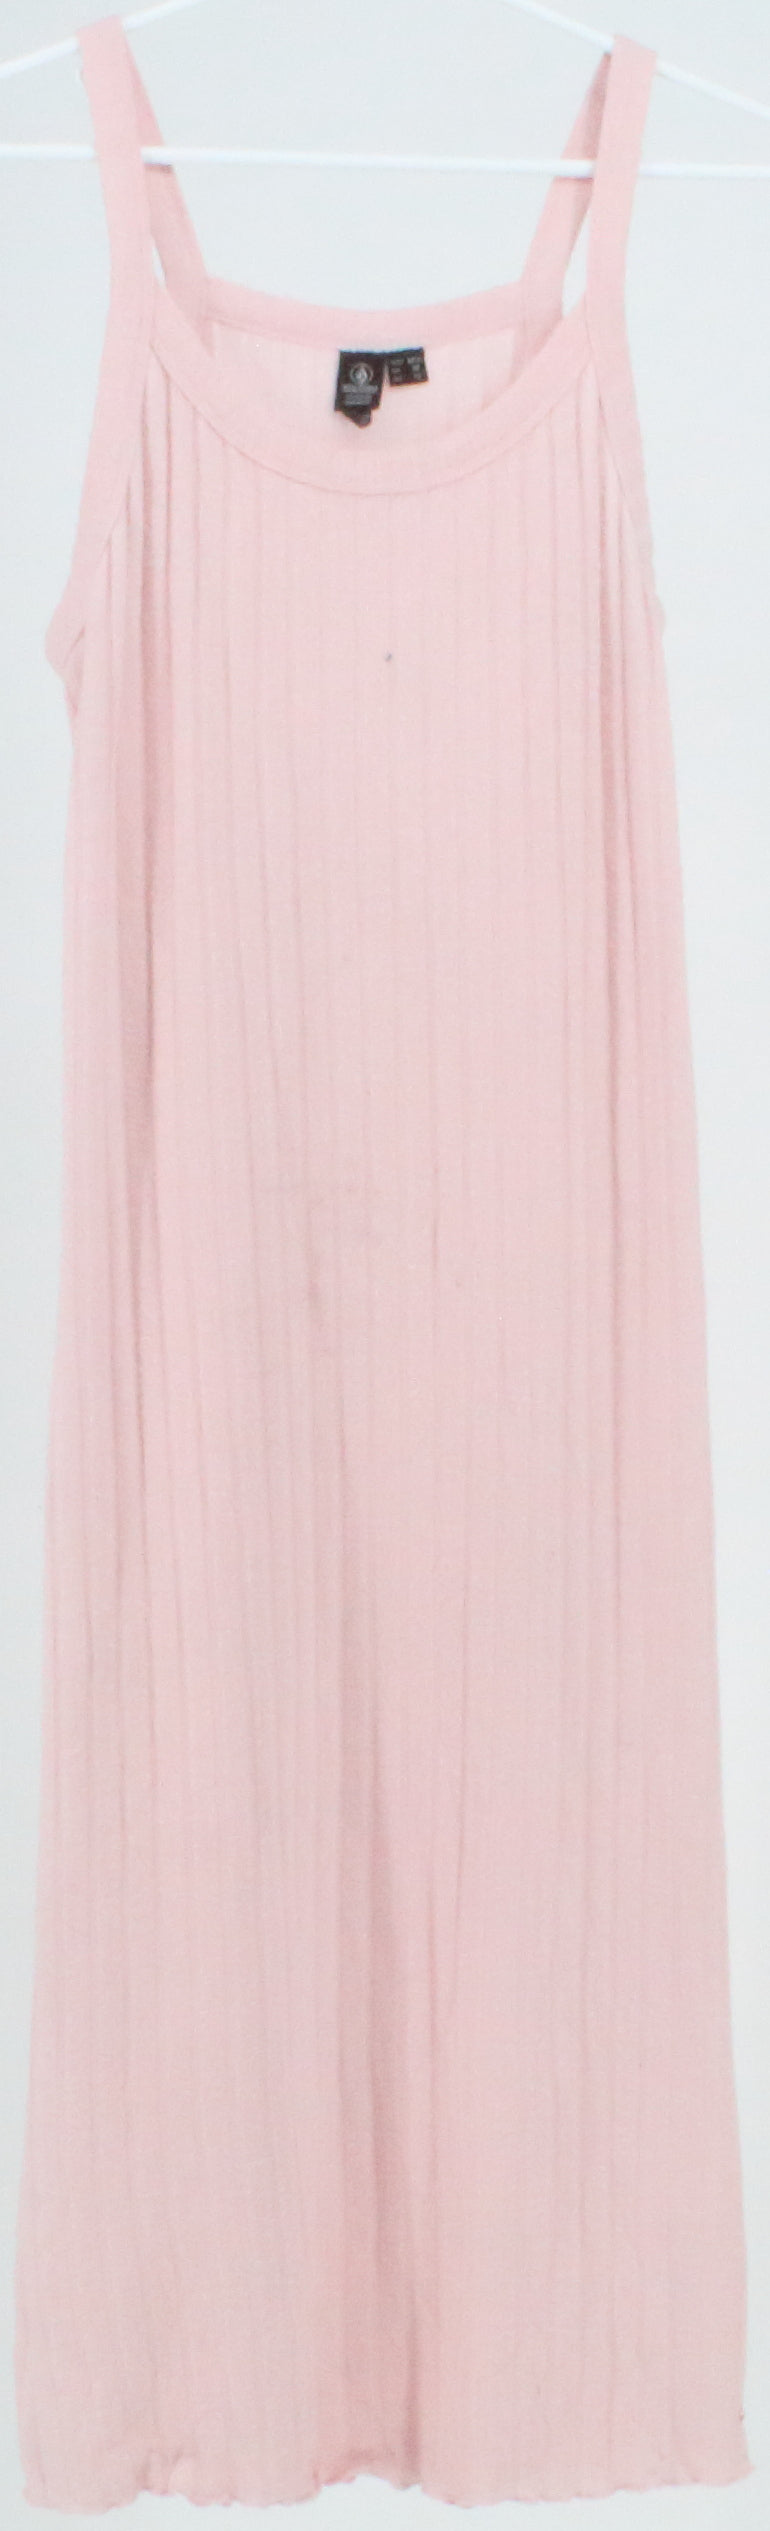 Volcom Light Pink Sleeveless Dress